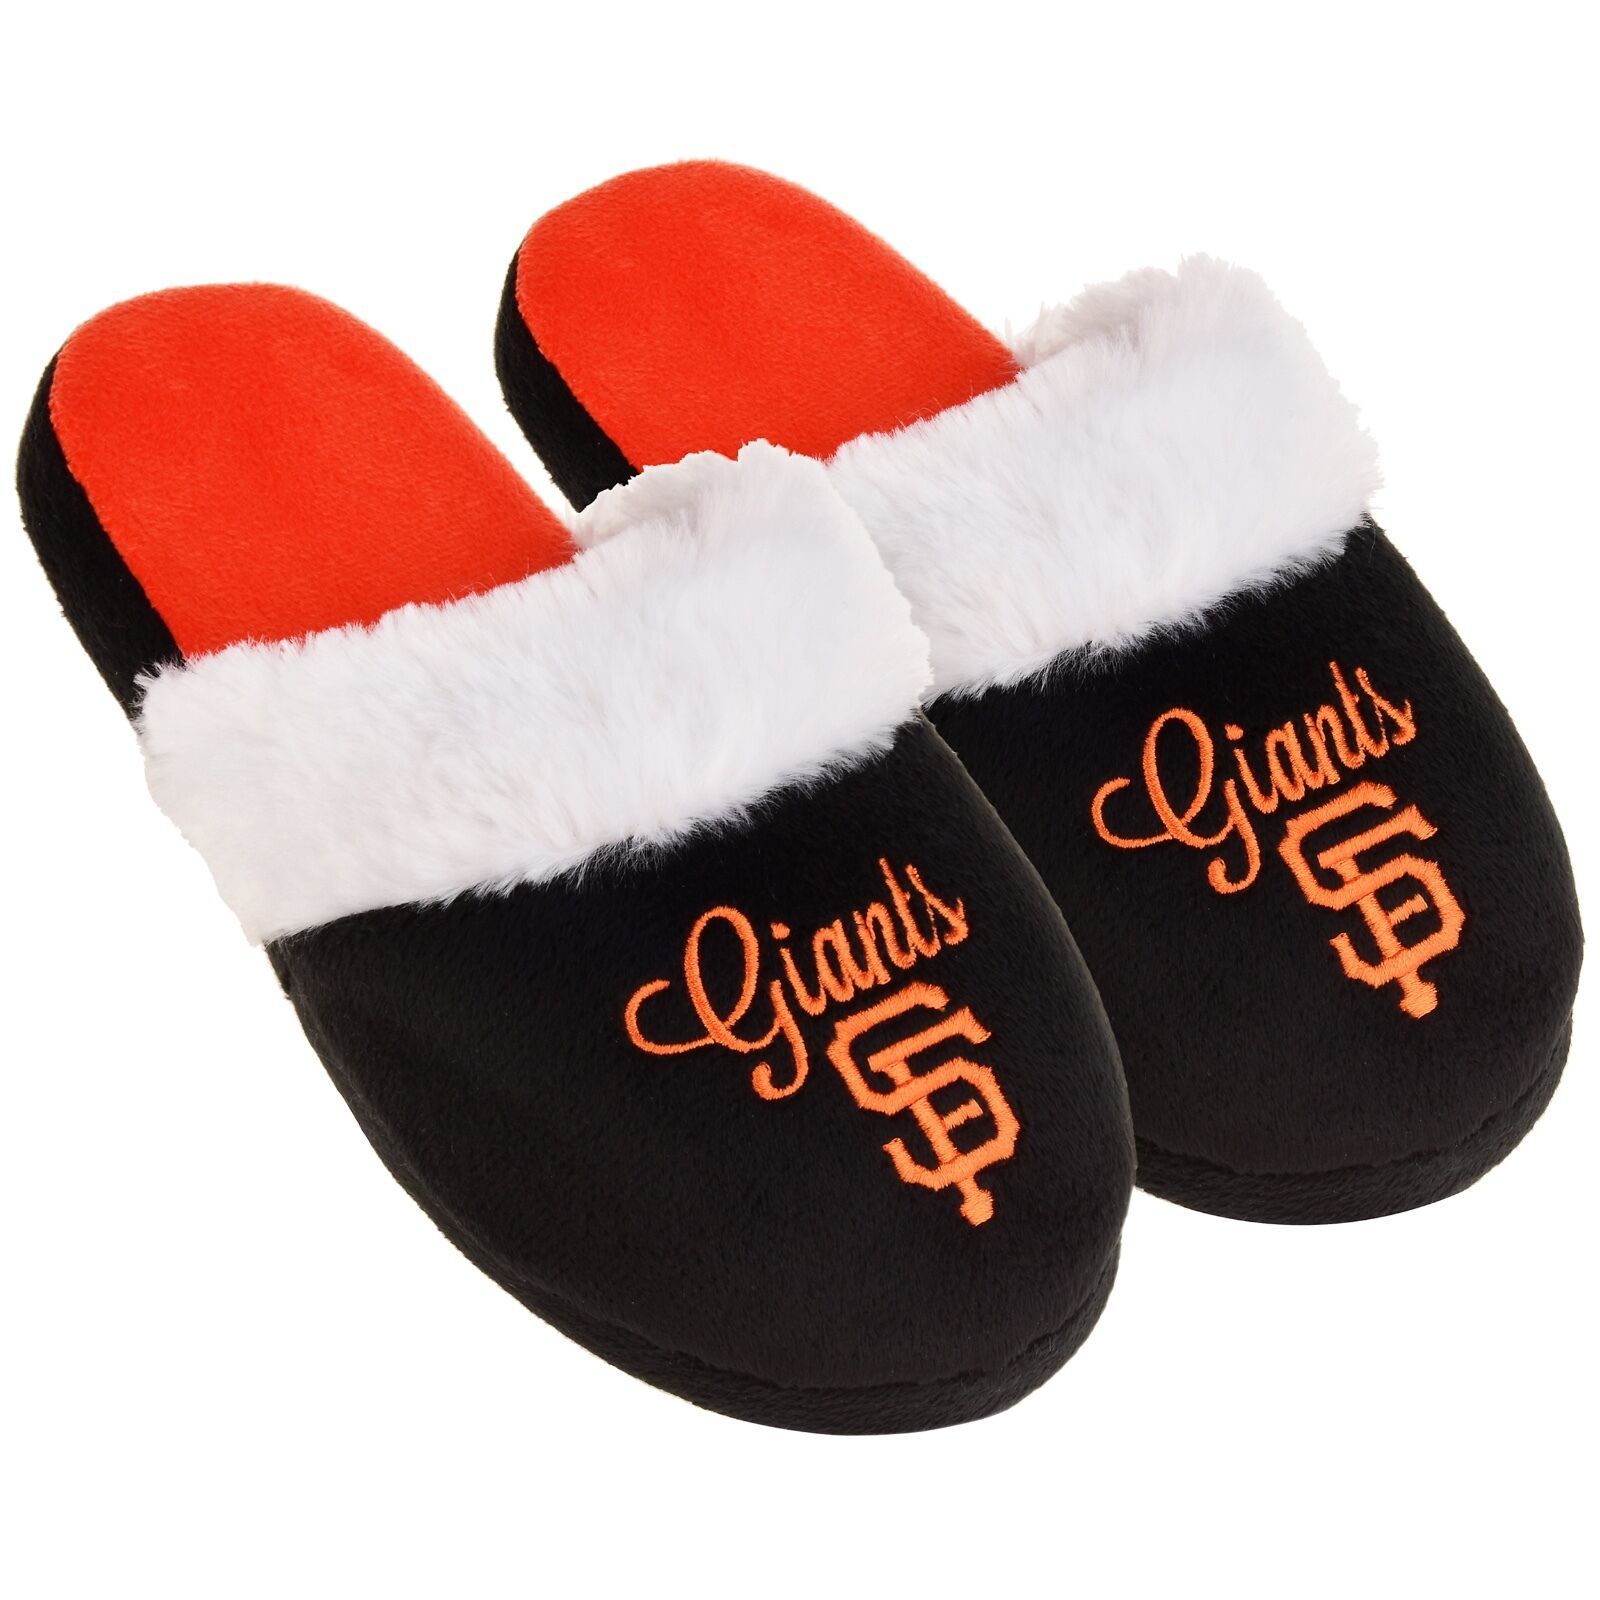 San Francisco Giants Womens Colorblock Fur Slide Slippers MLB - S 5/6 - M 7/8